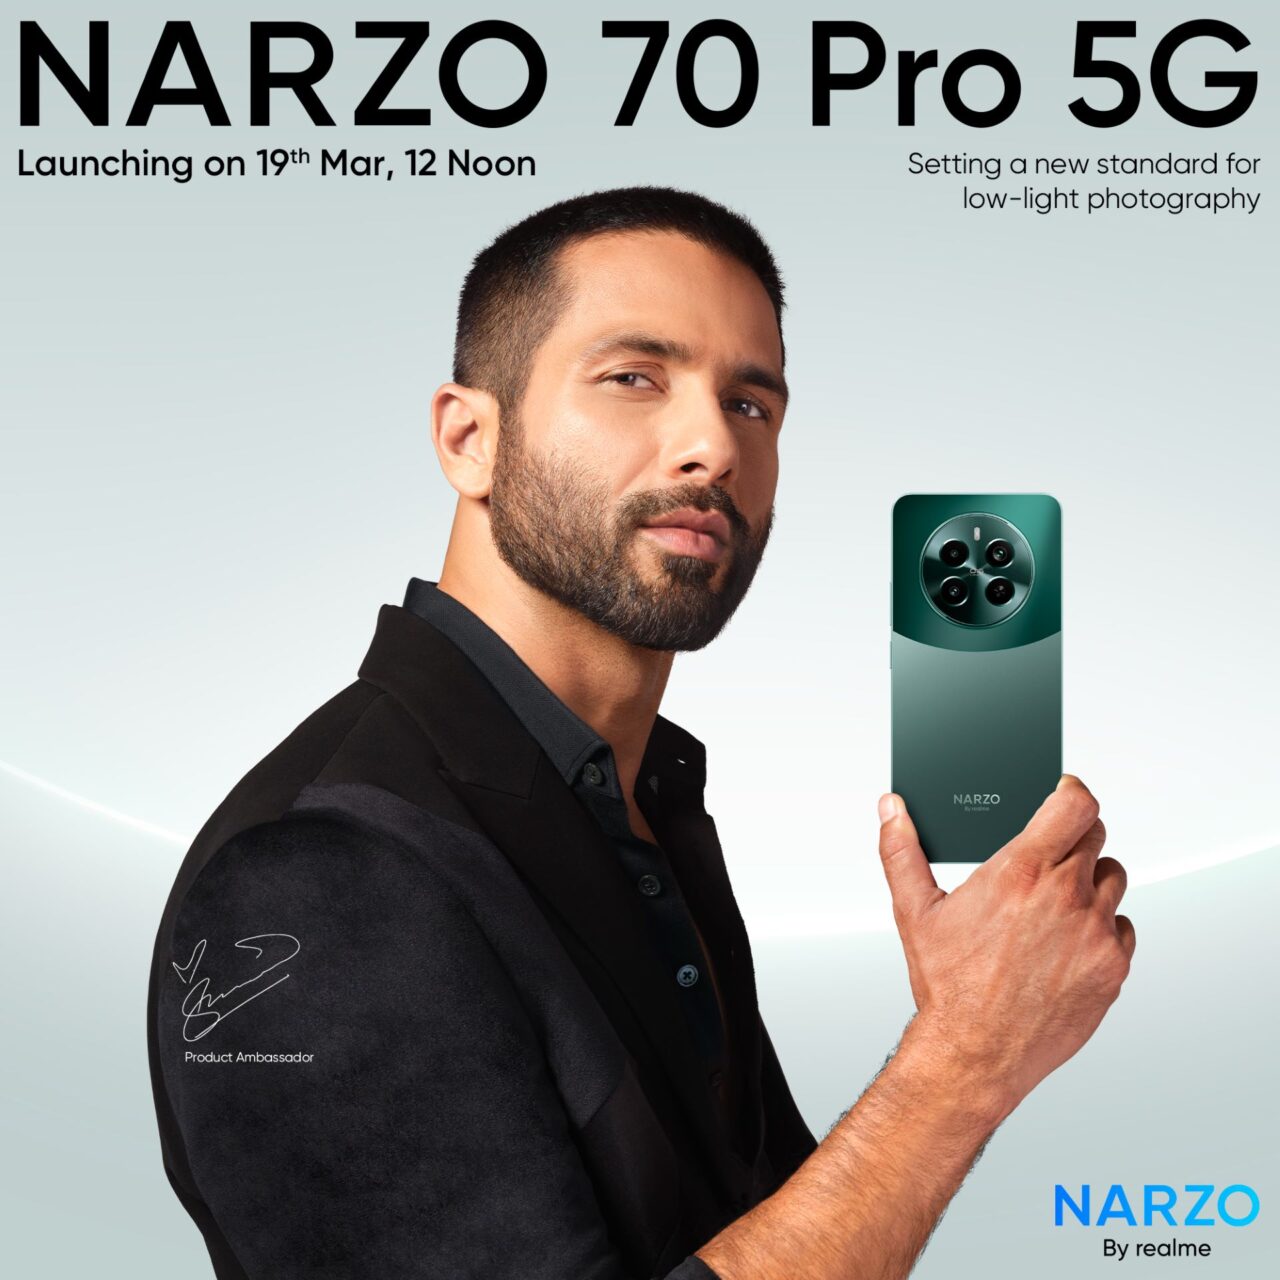 Shahid Kapoor to Endorse realme's NARZO 70 Pro 5G